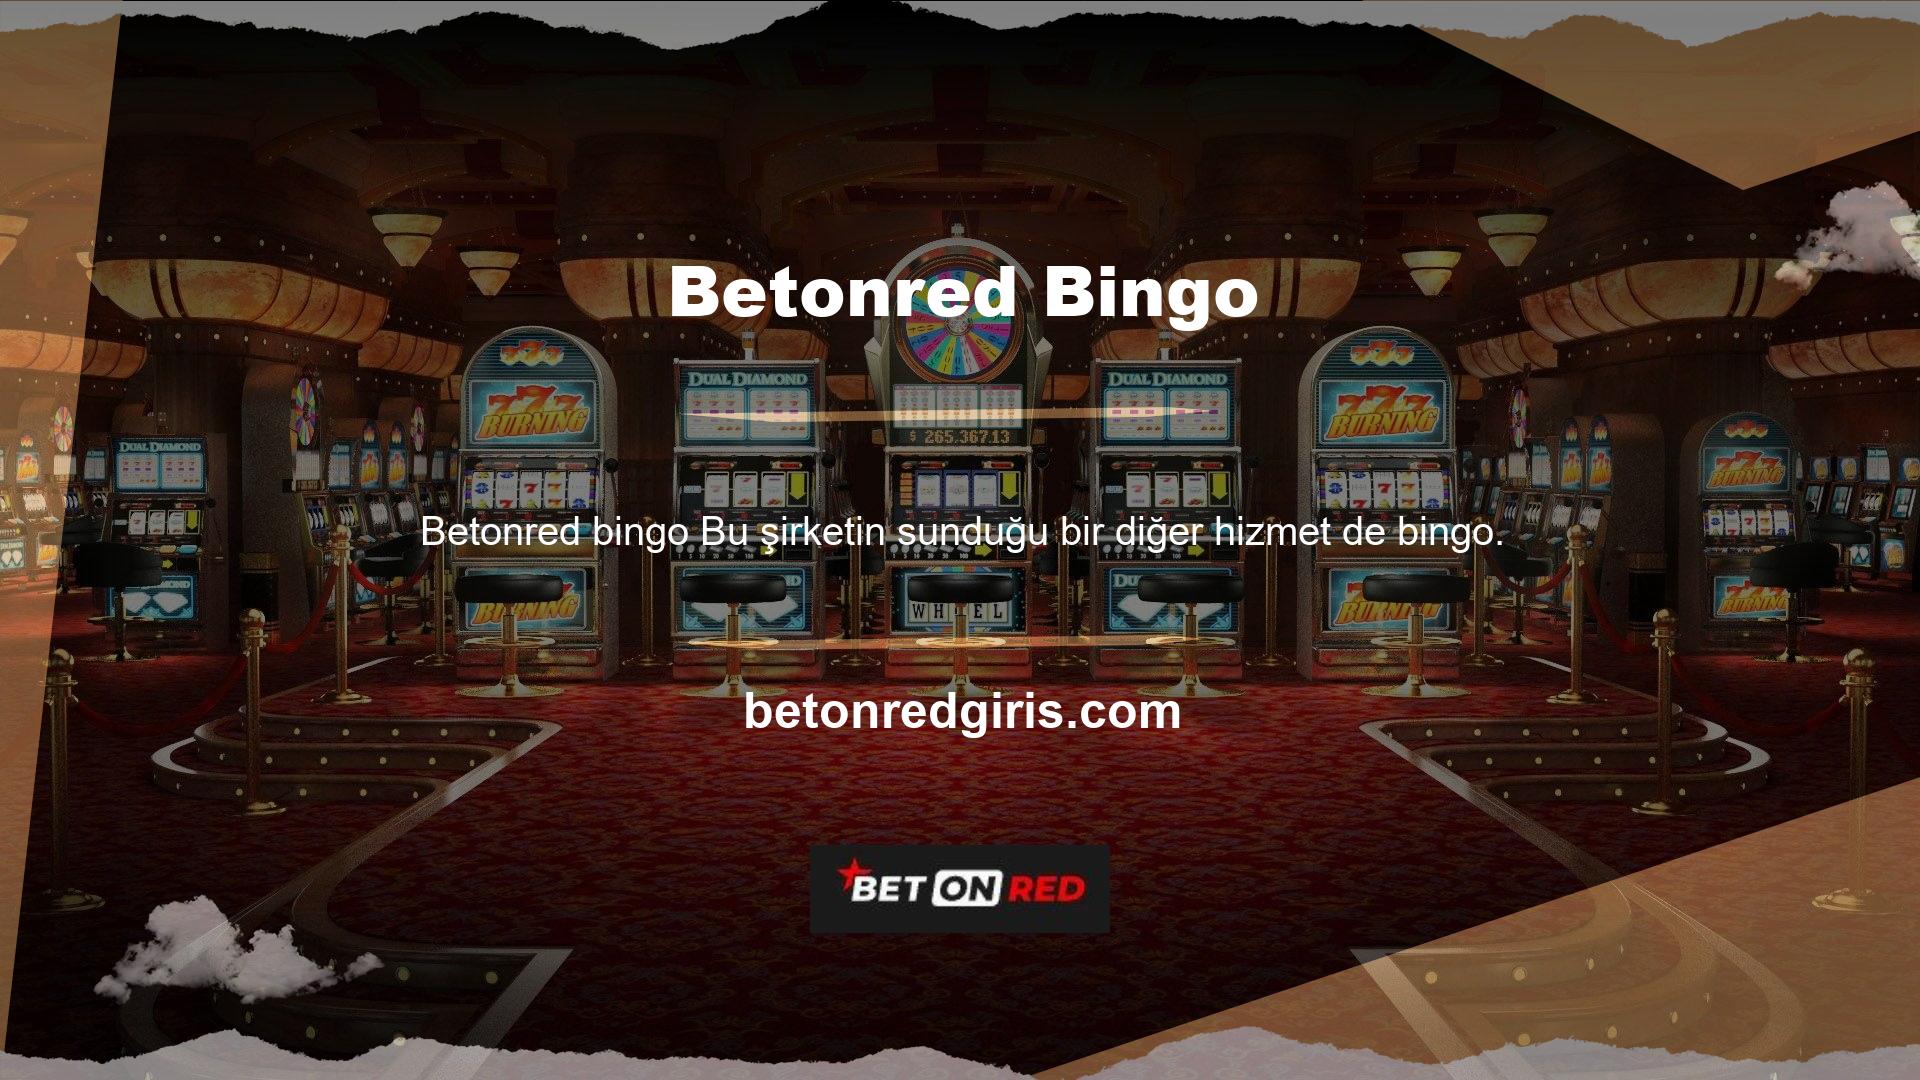 Betonred bingo